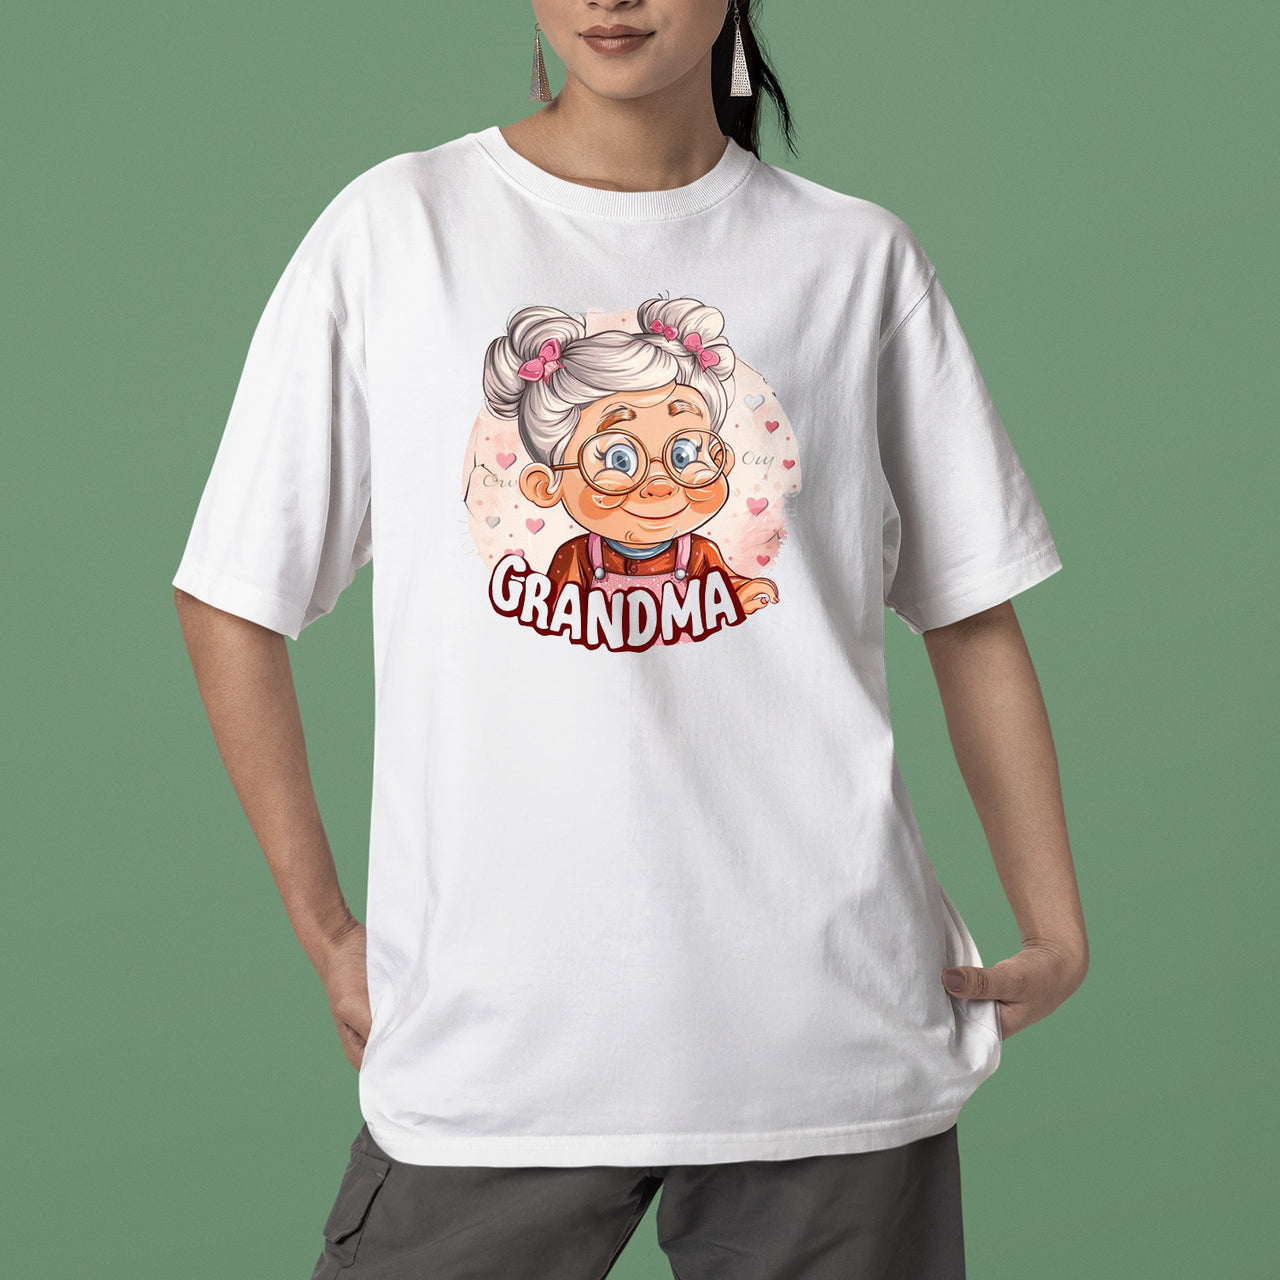 Cute Chibi Grandma T-Shirt, Cute Chibi Nana Shirt, Celebrate Mom, Nana Shirt, Grandma Hoodie, Grandma Shirt, Mother's Day Gift For Grandma, Happy Mother's Day 02